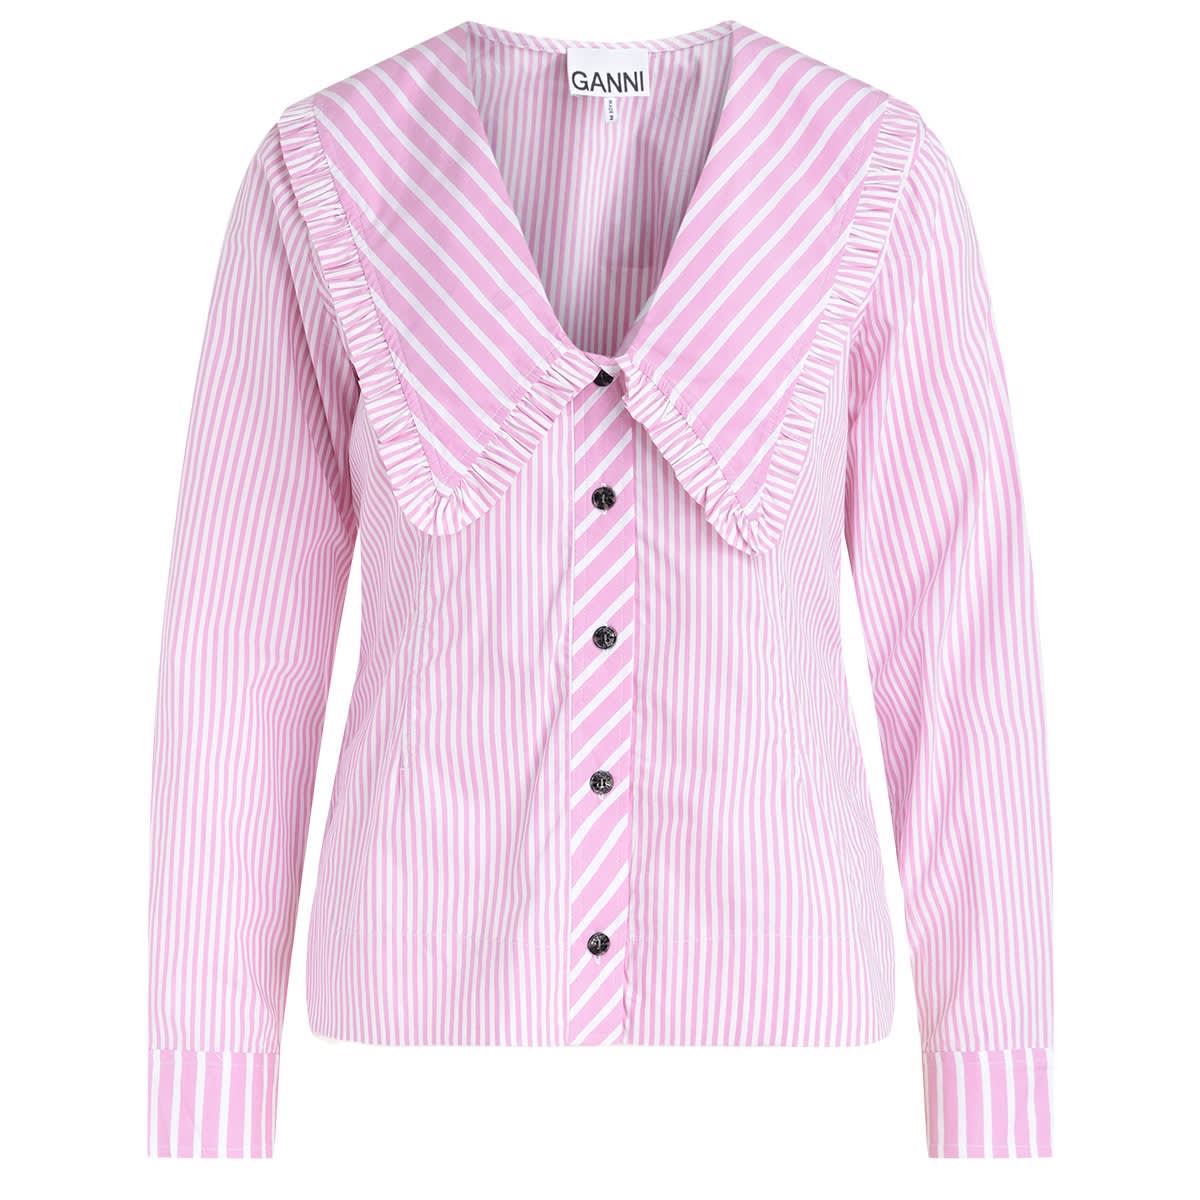 Ganni Pink Shirt With Stripes